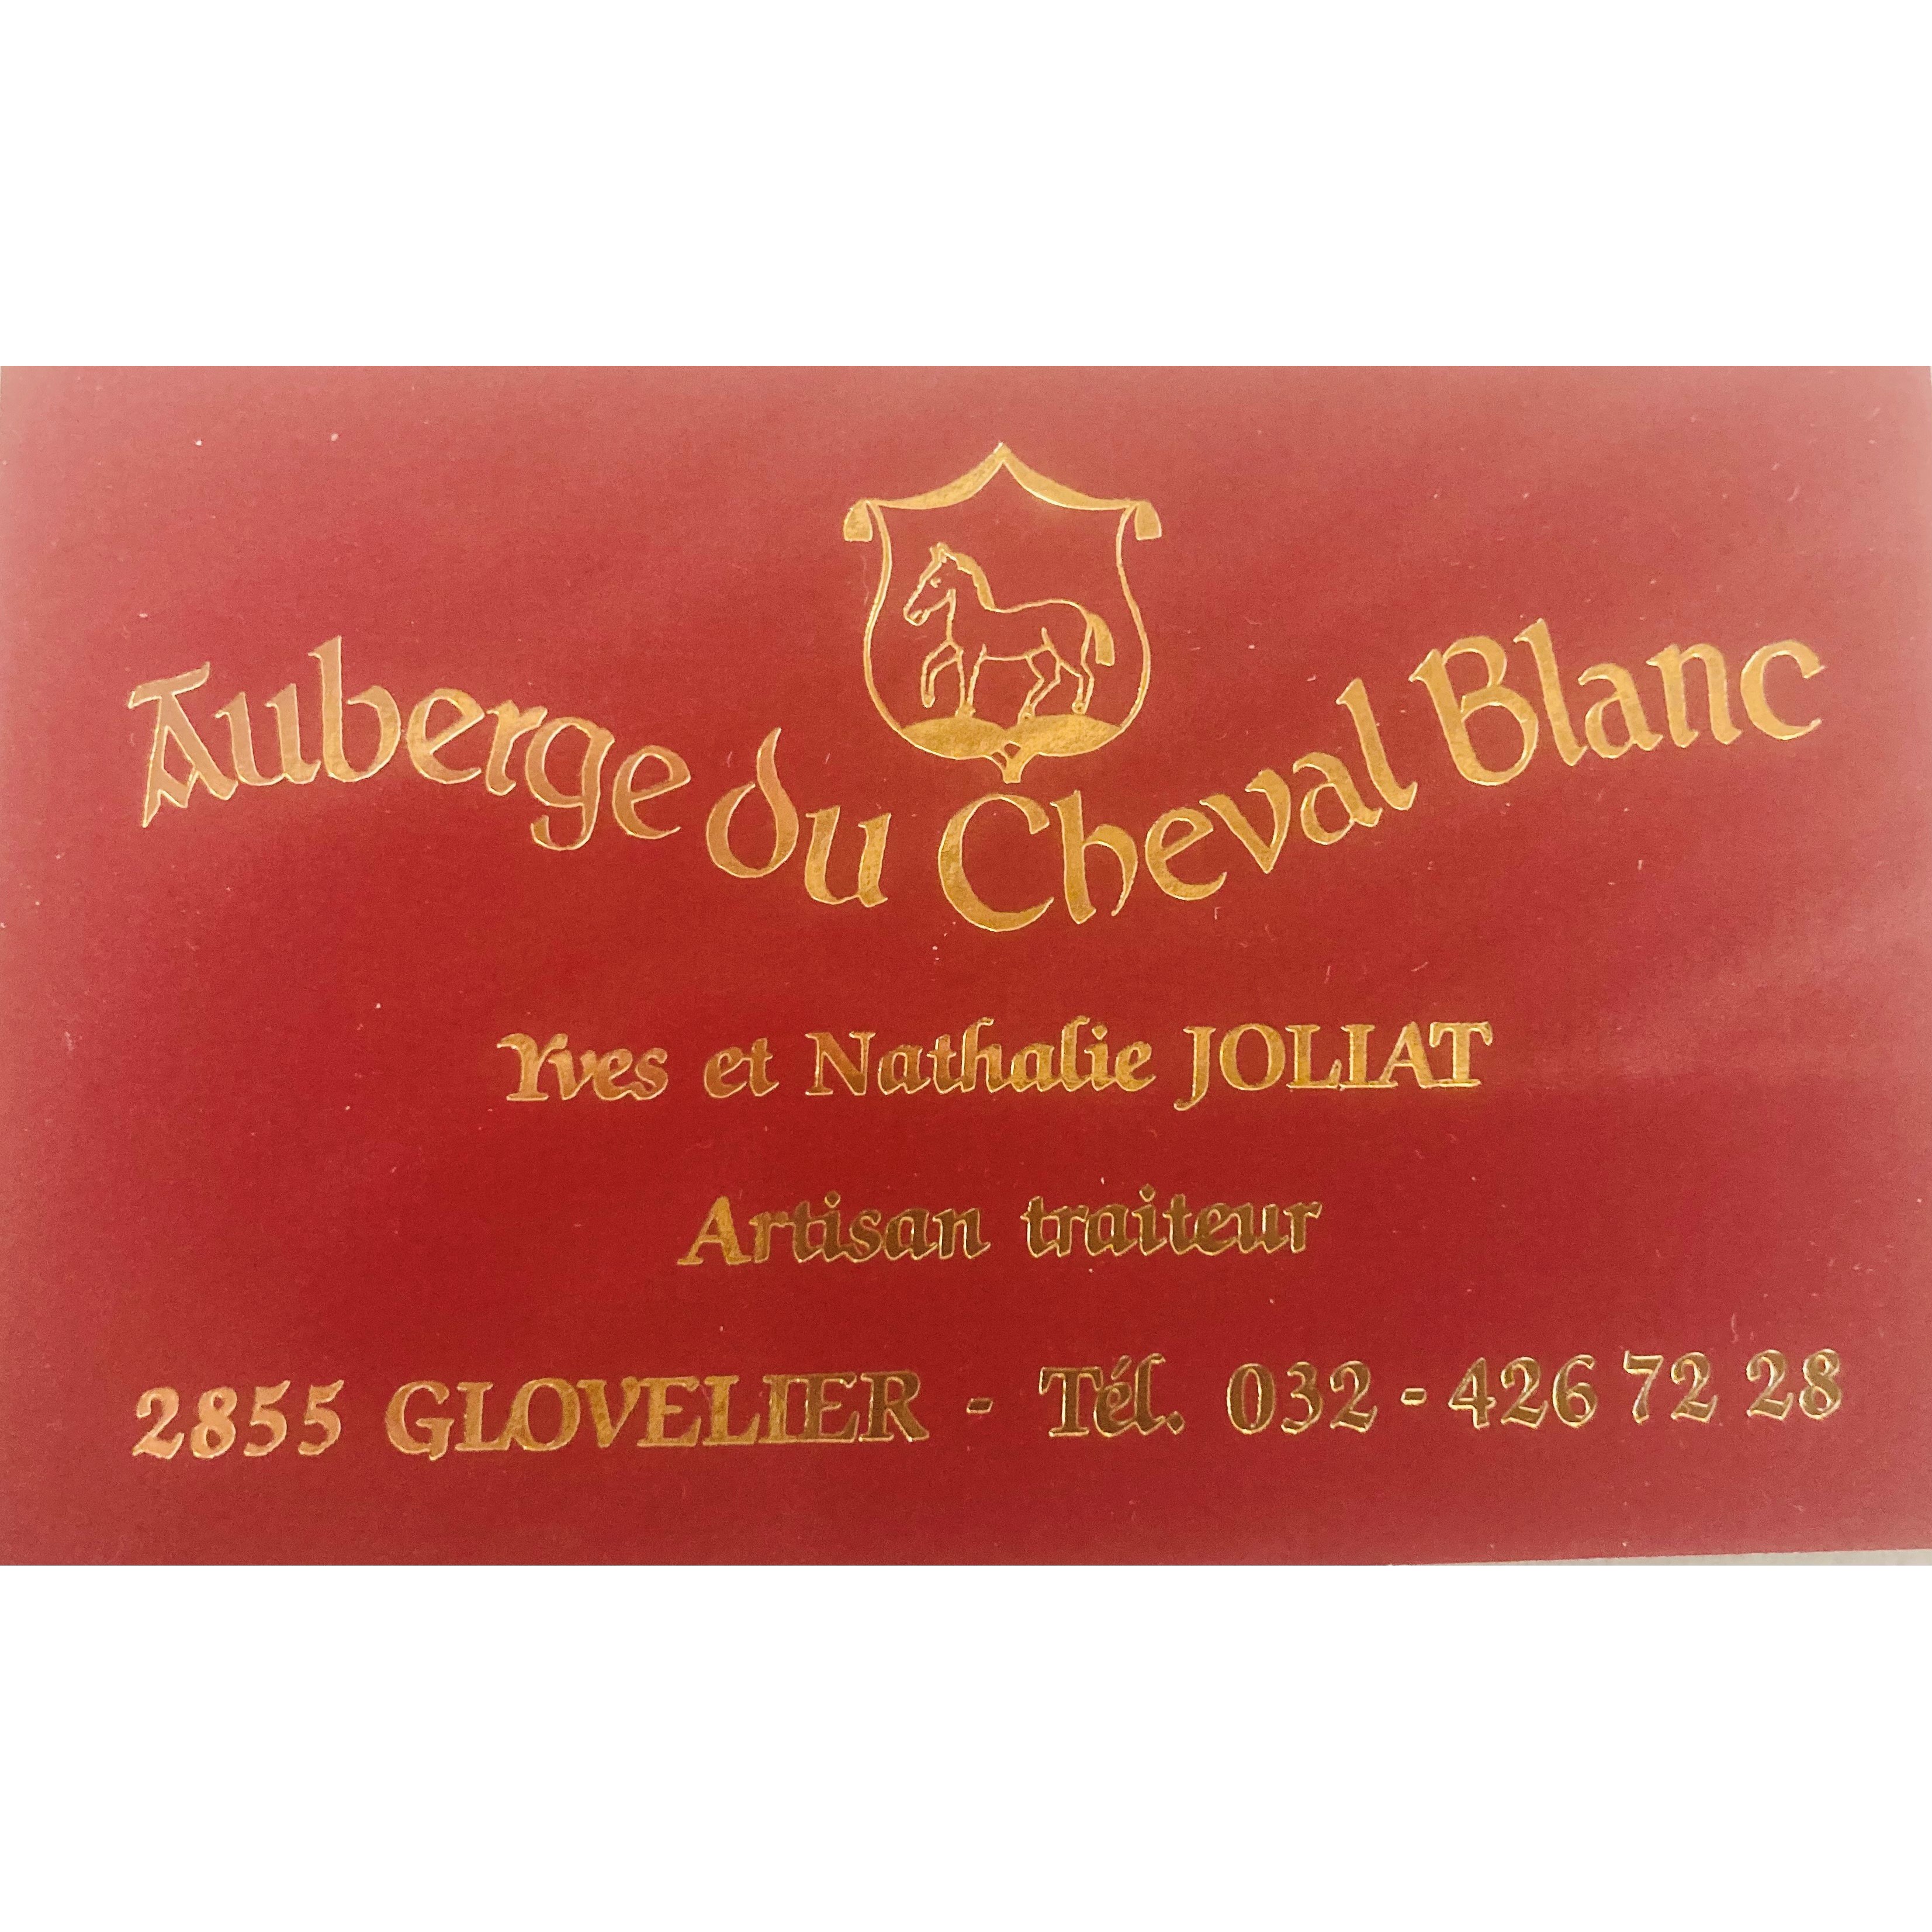 Auberge du Cheval-Blanc Logo